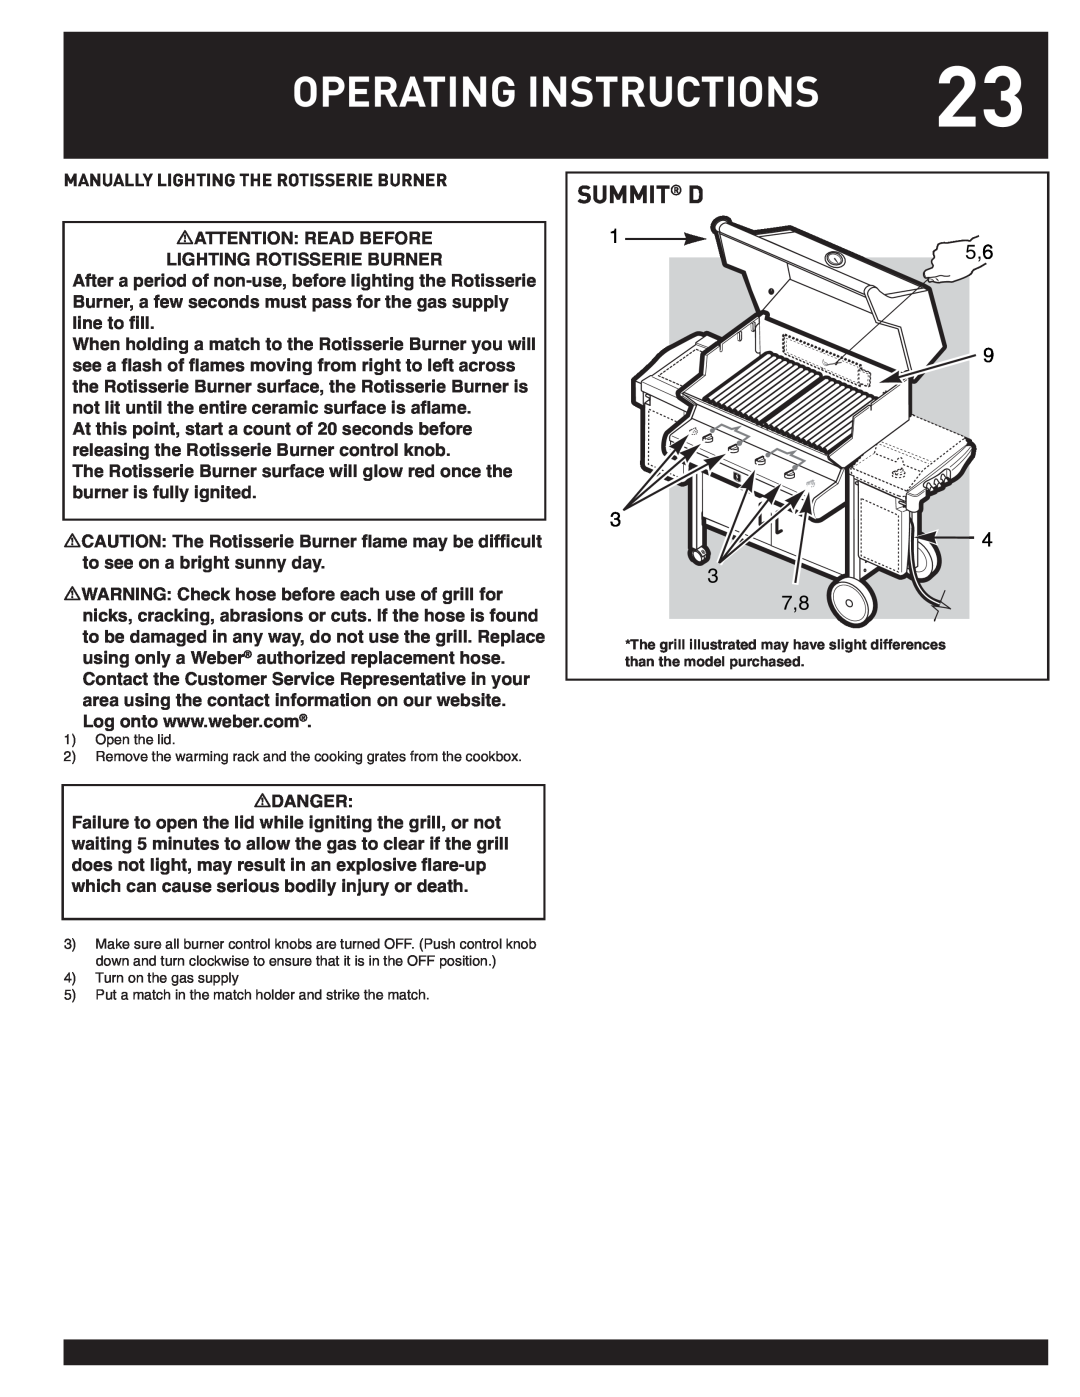 Weber 38044 manual Operating Instructions, Summit D, Manually Lighting The Rotisserie Burner 